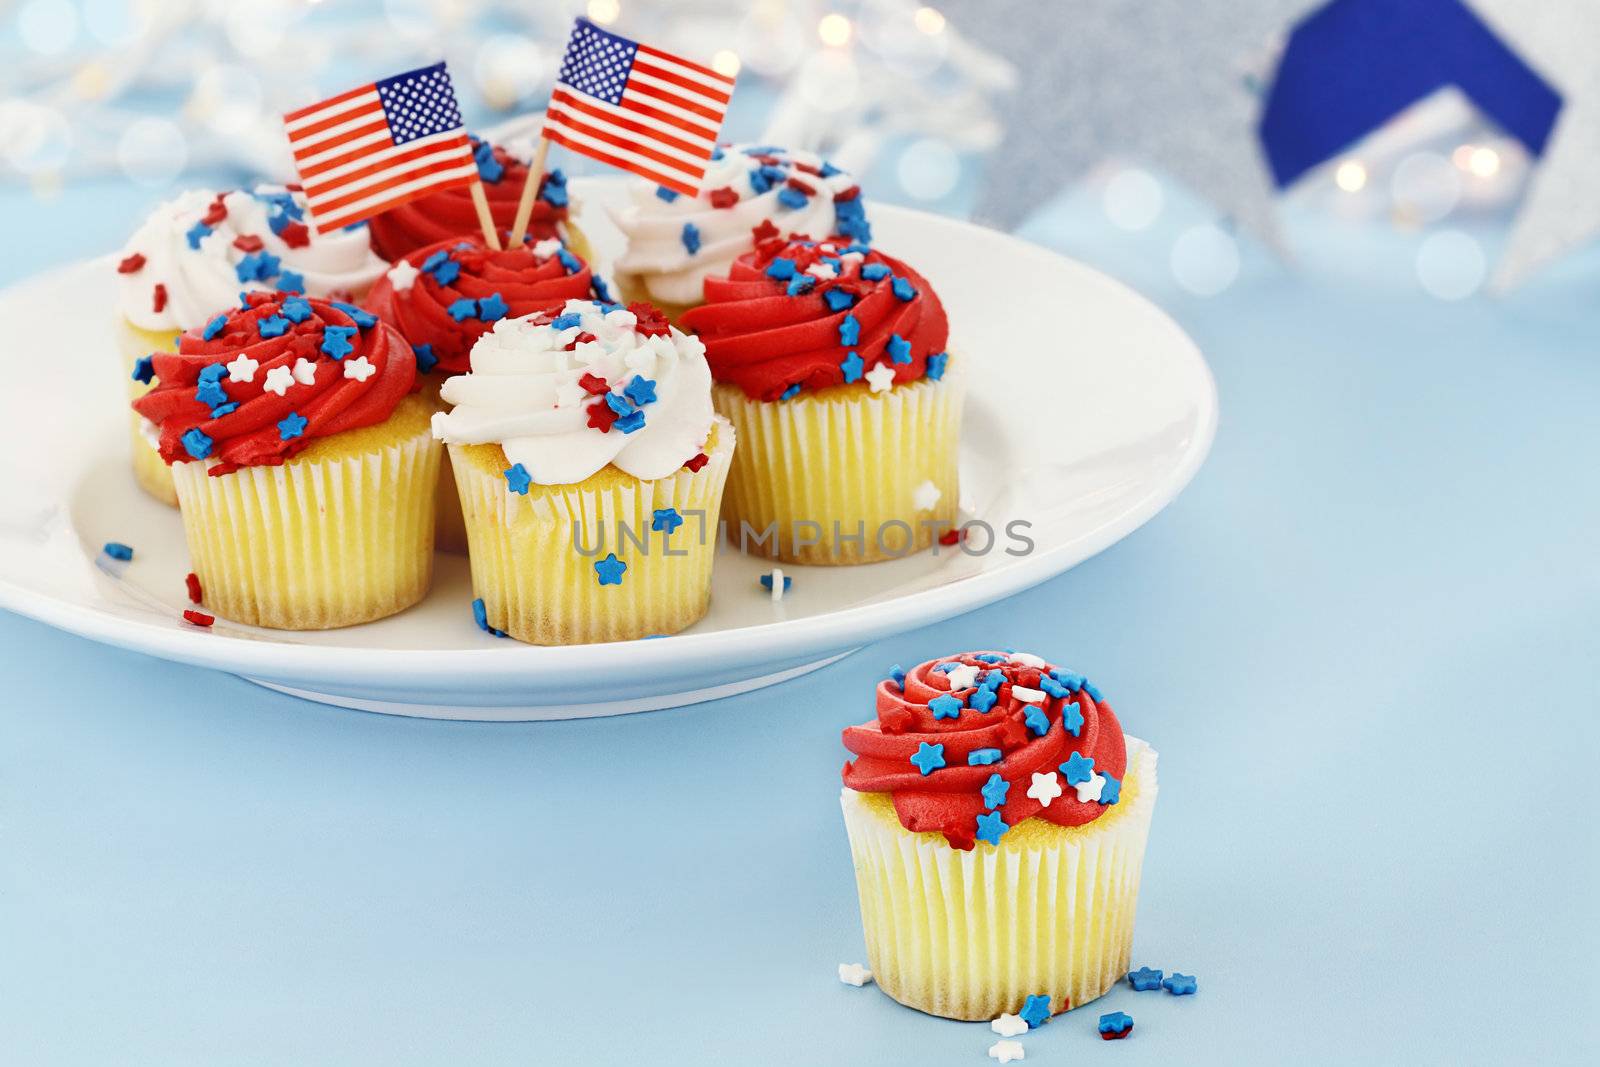 Patriotic Cupcakes by StephanieFrey